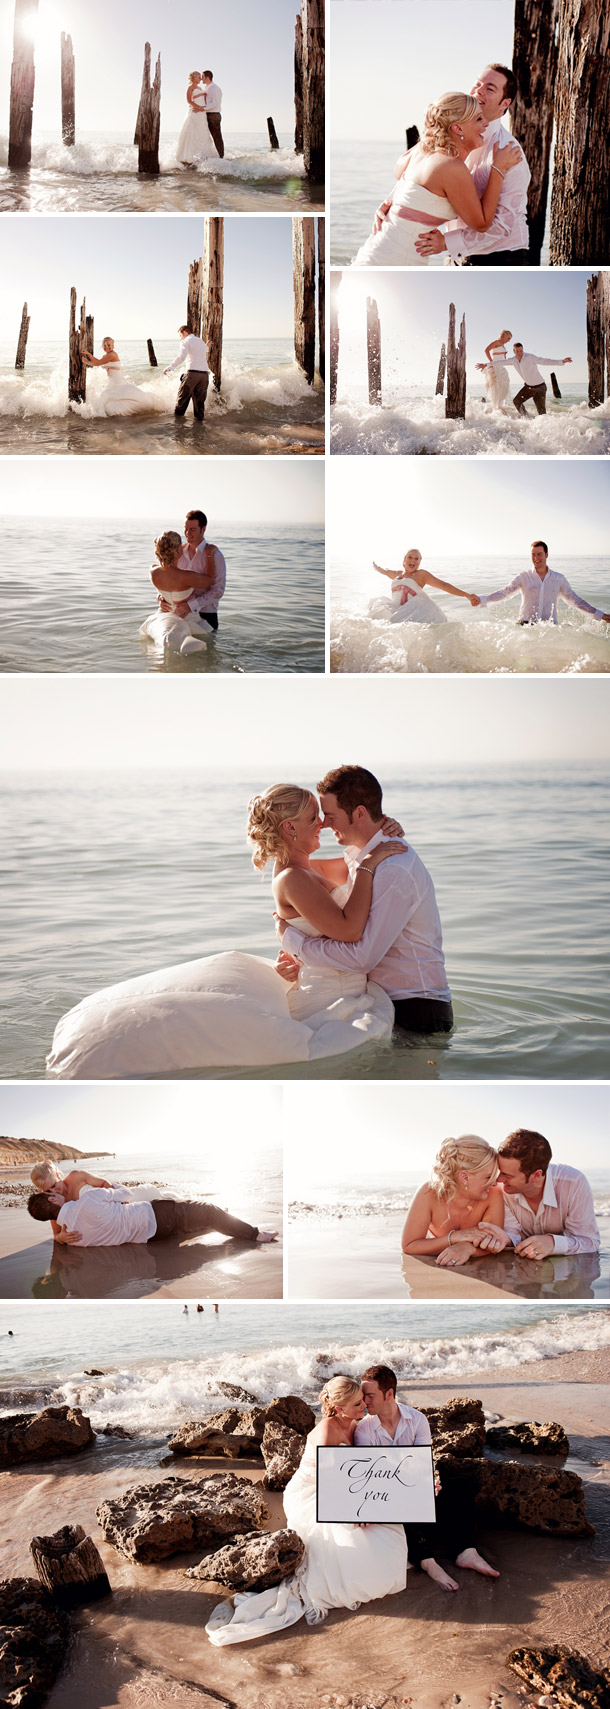 Ashleigh und Ryan - Wundervolles After-Wedding-Shooting von Angelsmith Photography